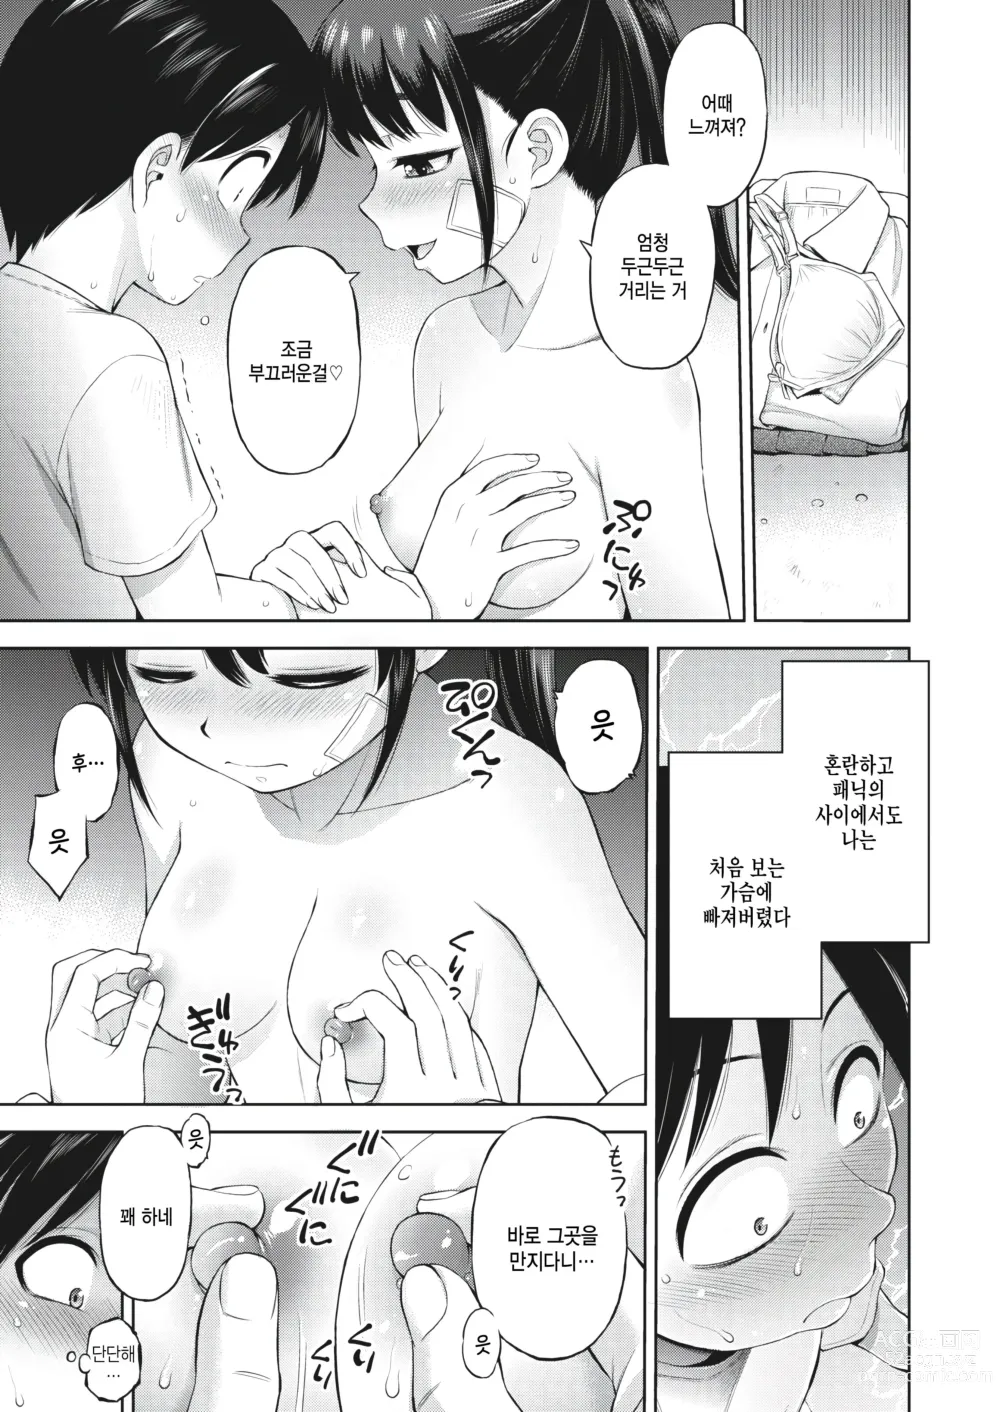 Page 7 of manga Kanojo to Ore no Jikan